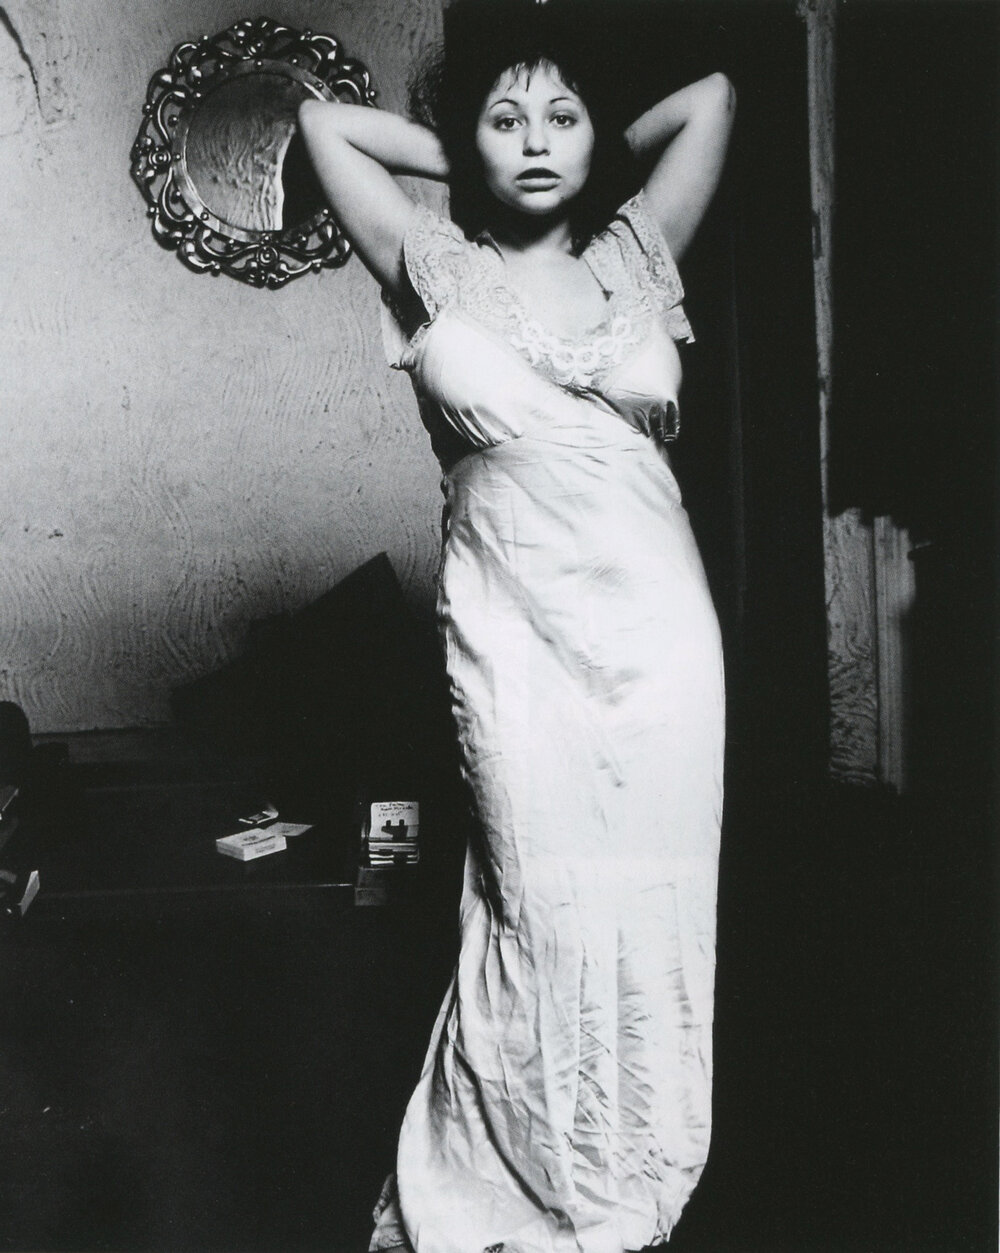 Penny Arcade at 18. Photo by Peter Hujar, 1969.